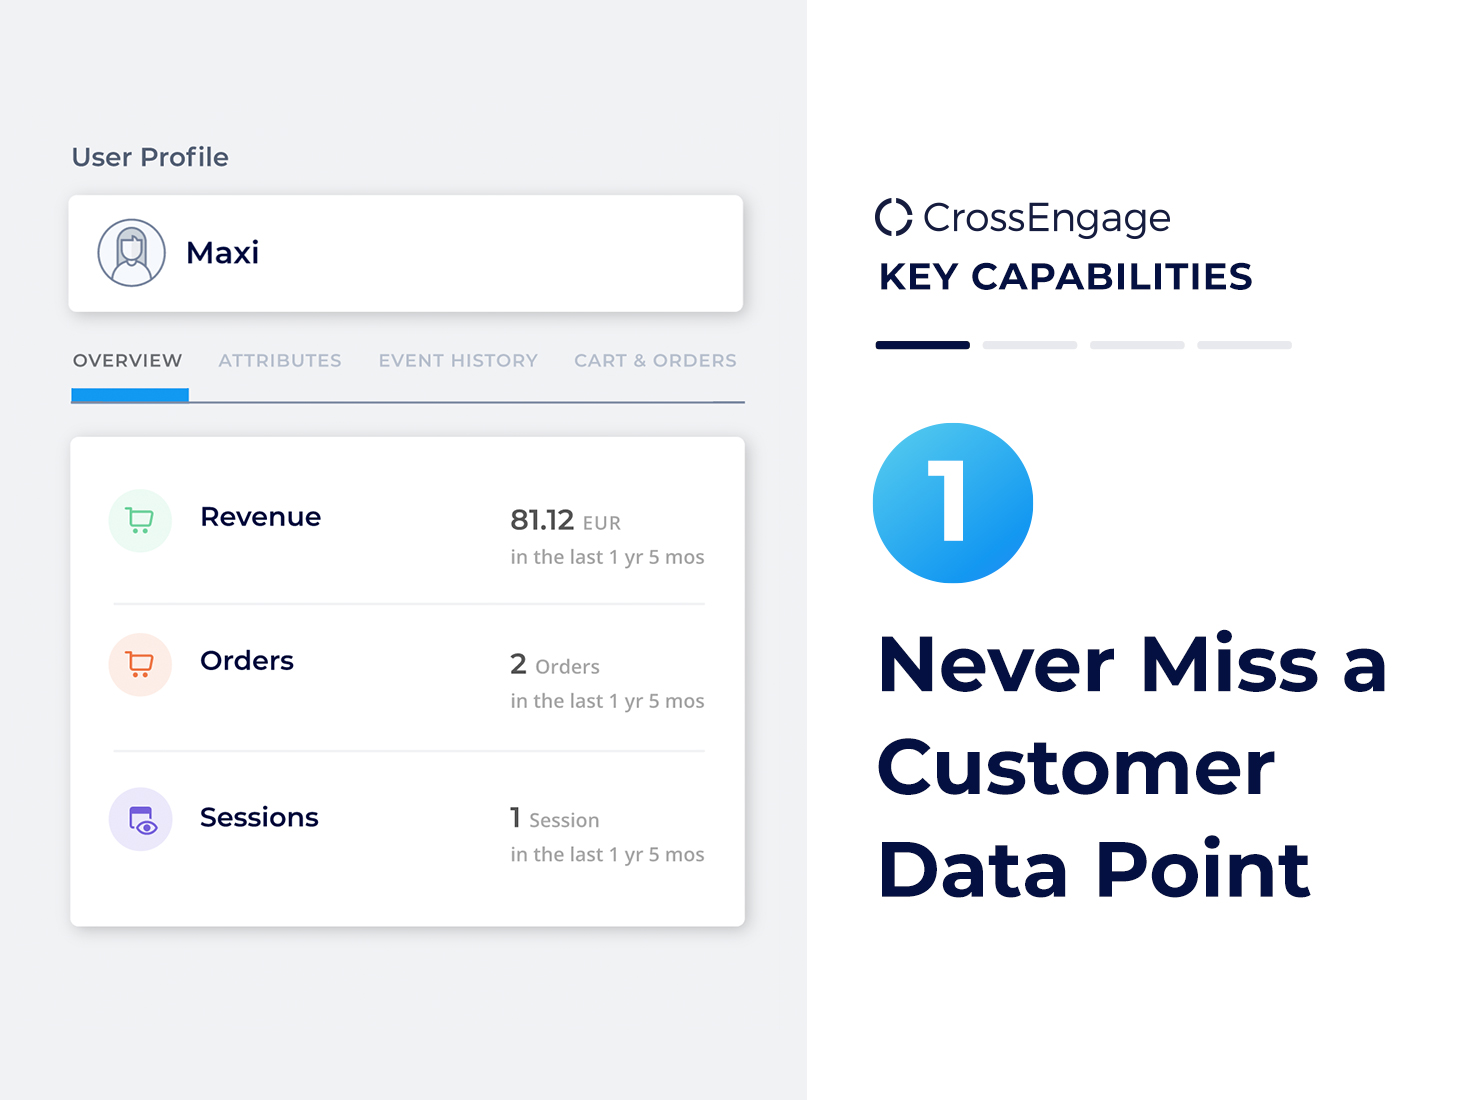 Never Miss a Customer Data Point